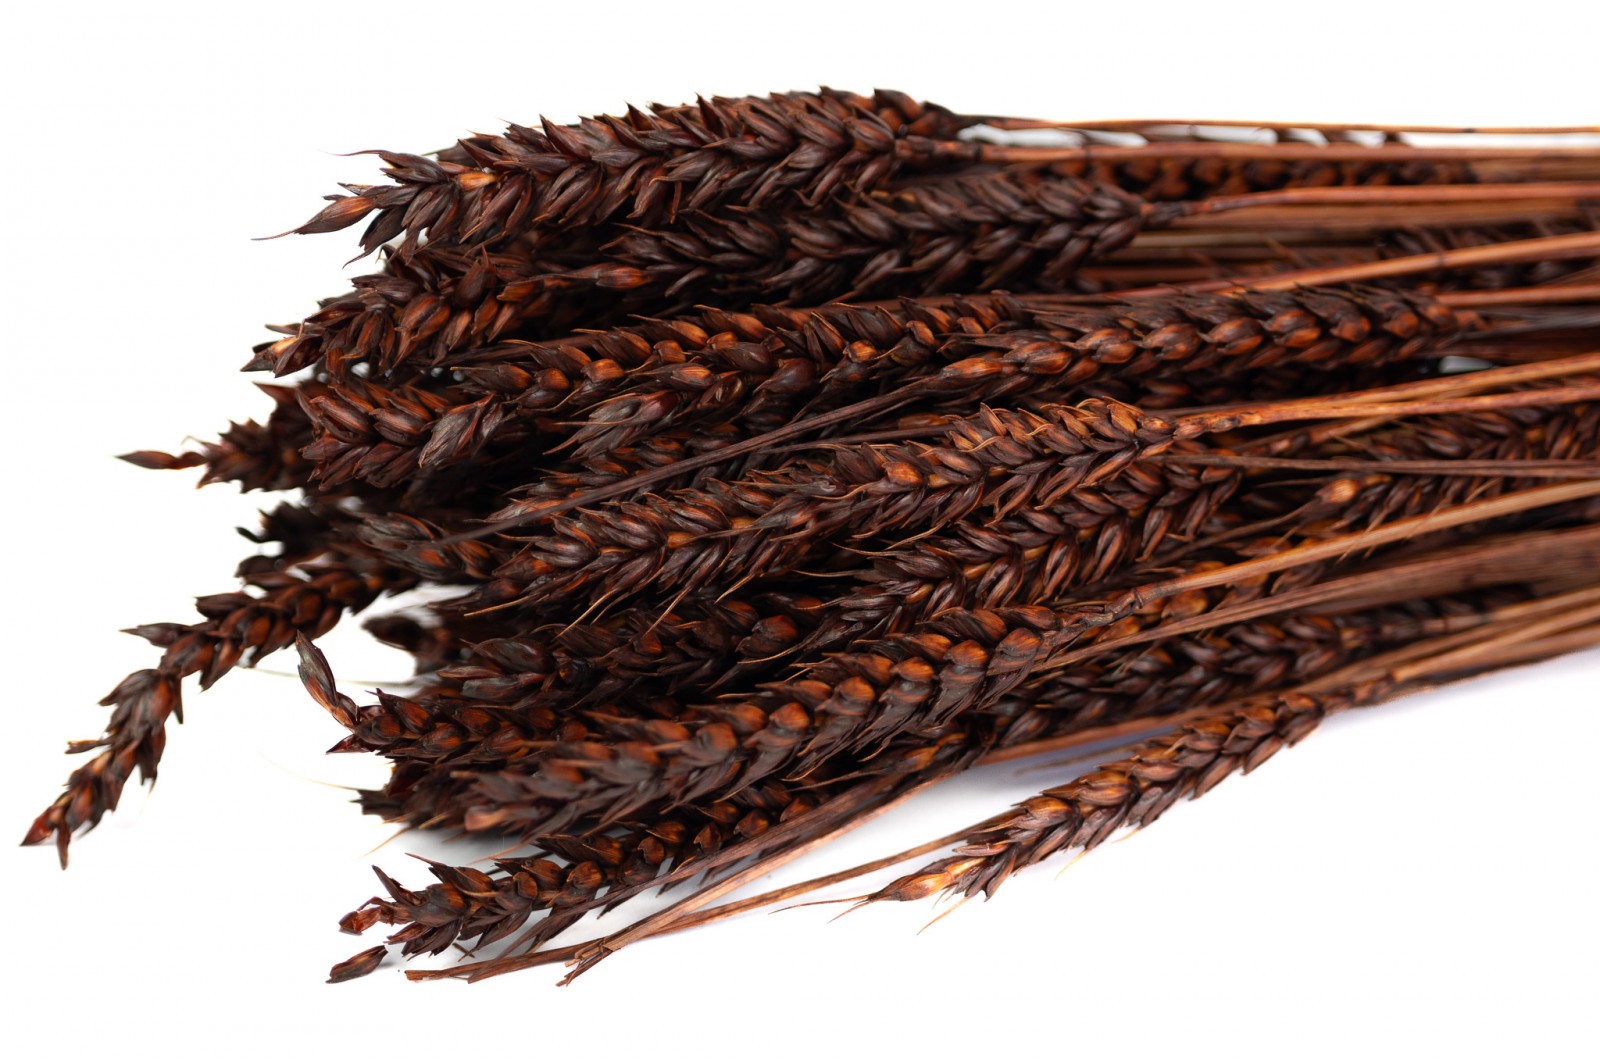 dried-wheat-8